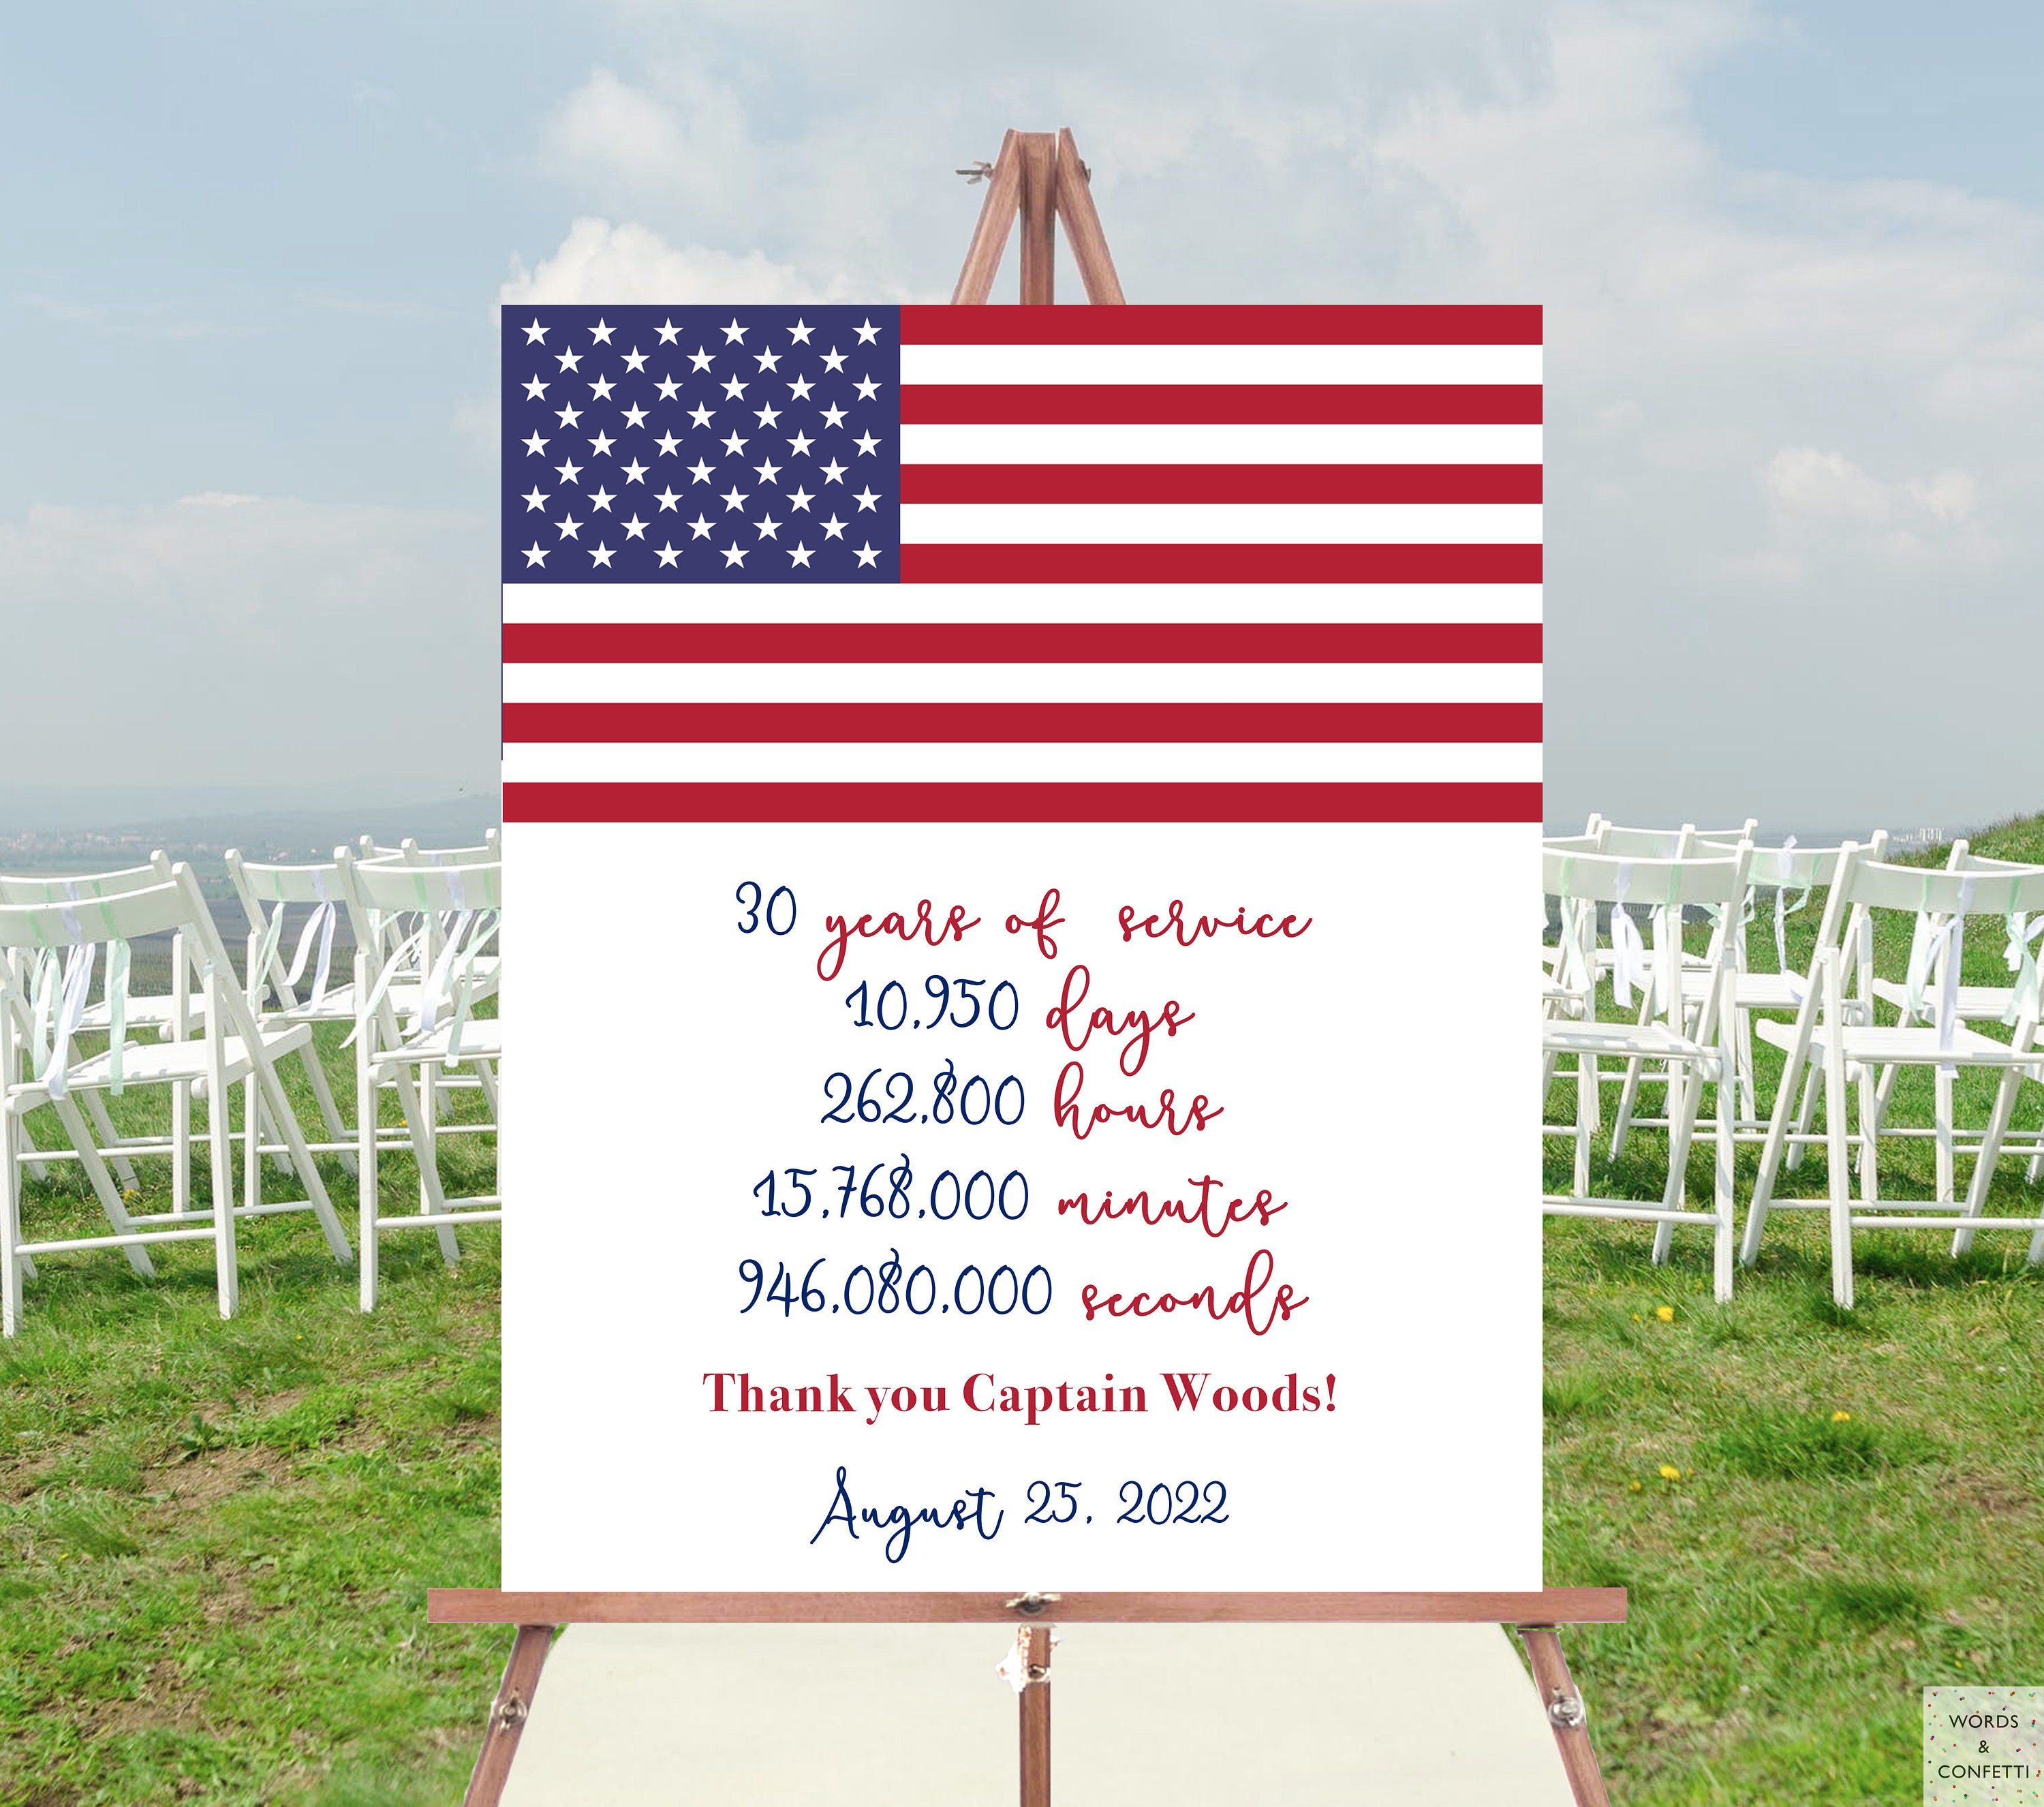 Military Retirement Ceremony Invitation, American Flag Invite